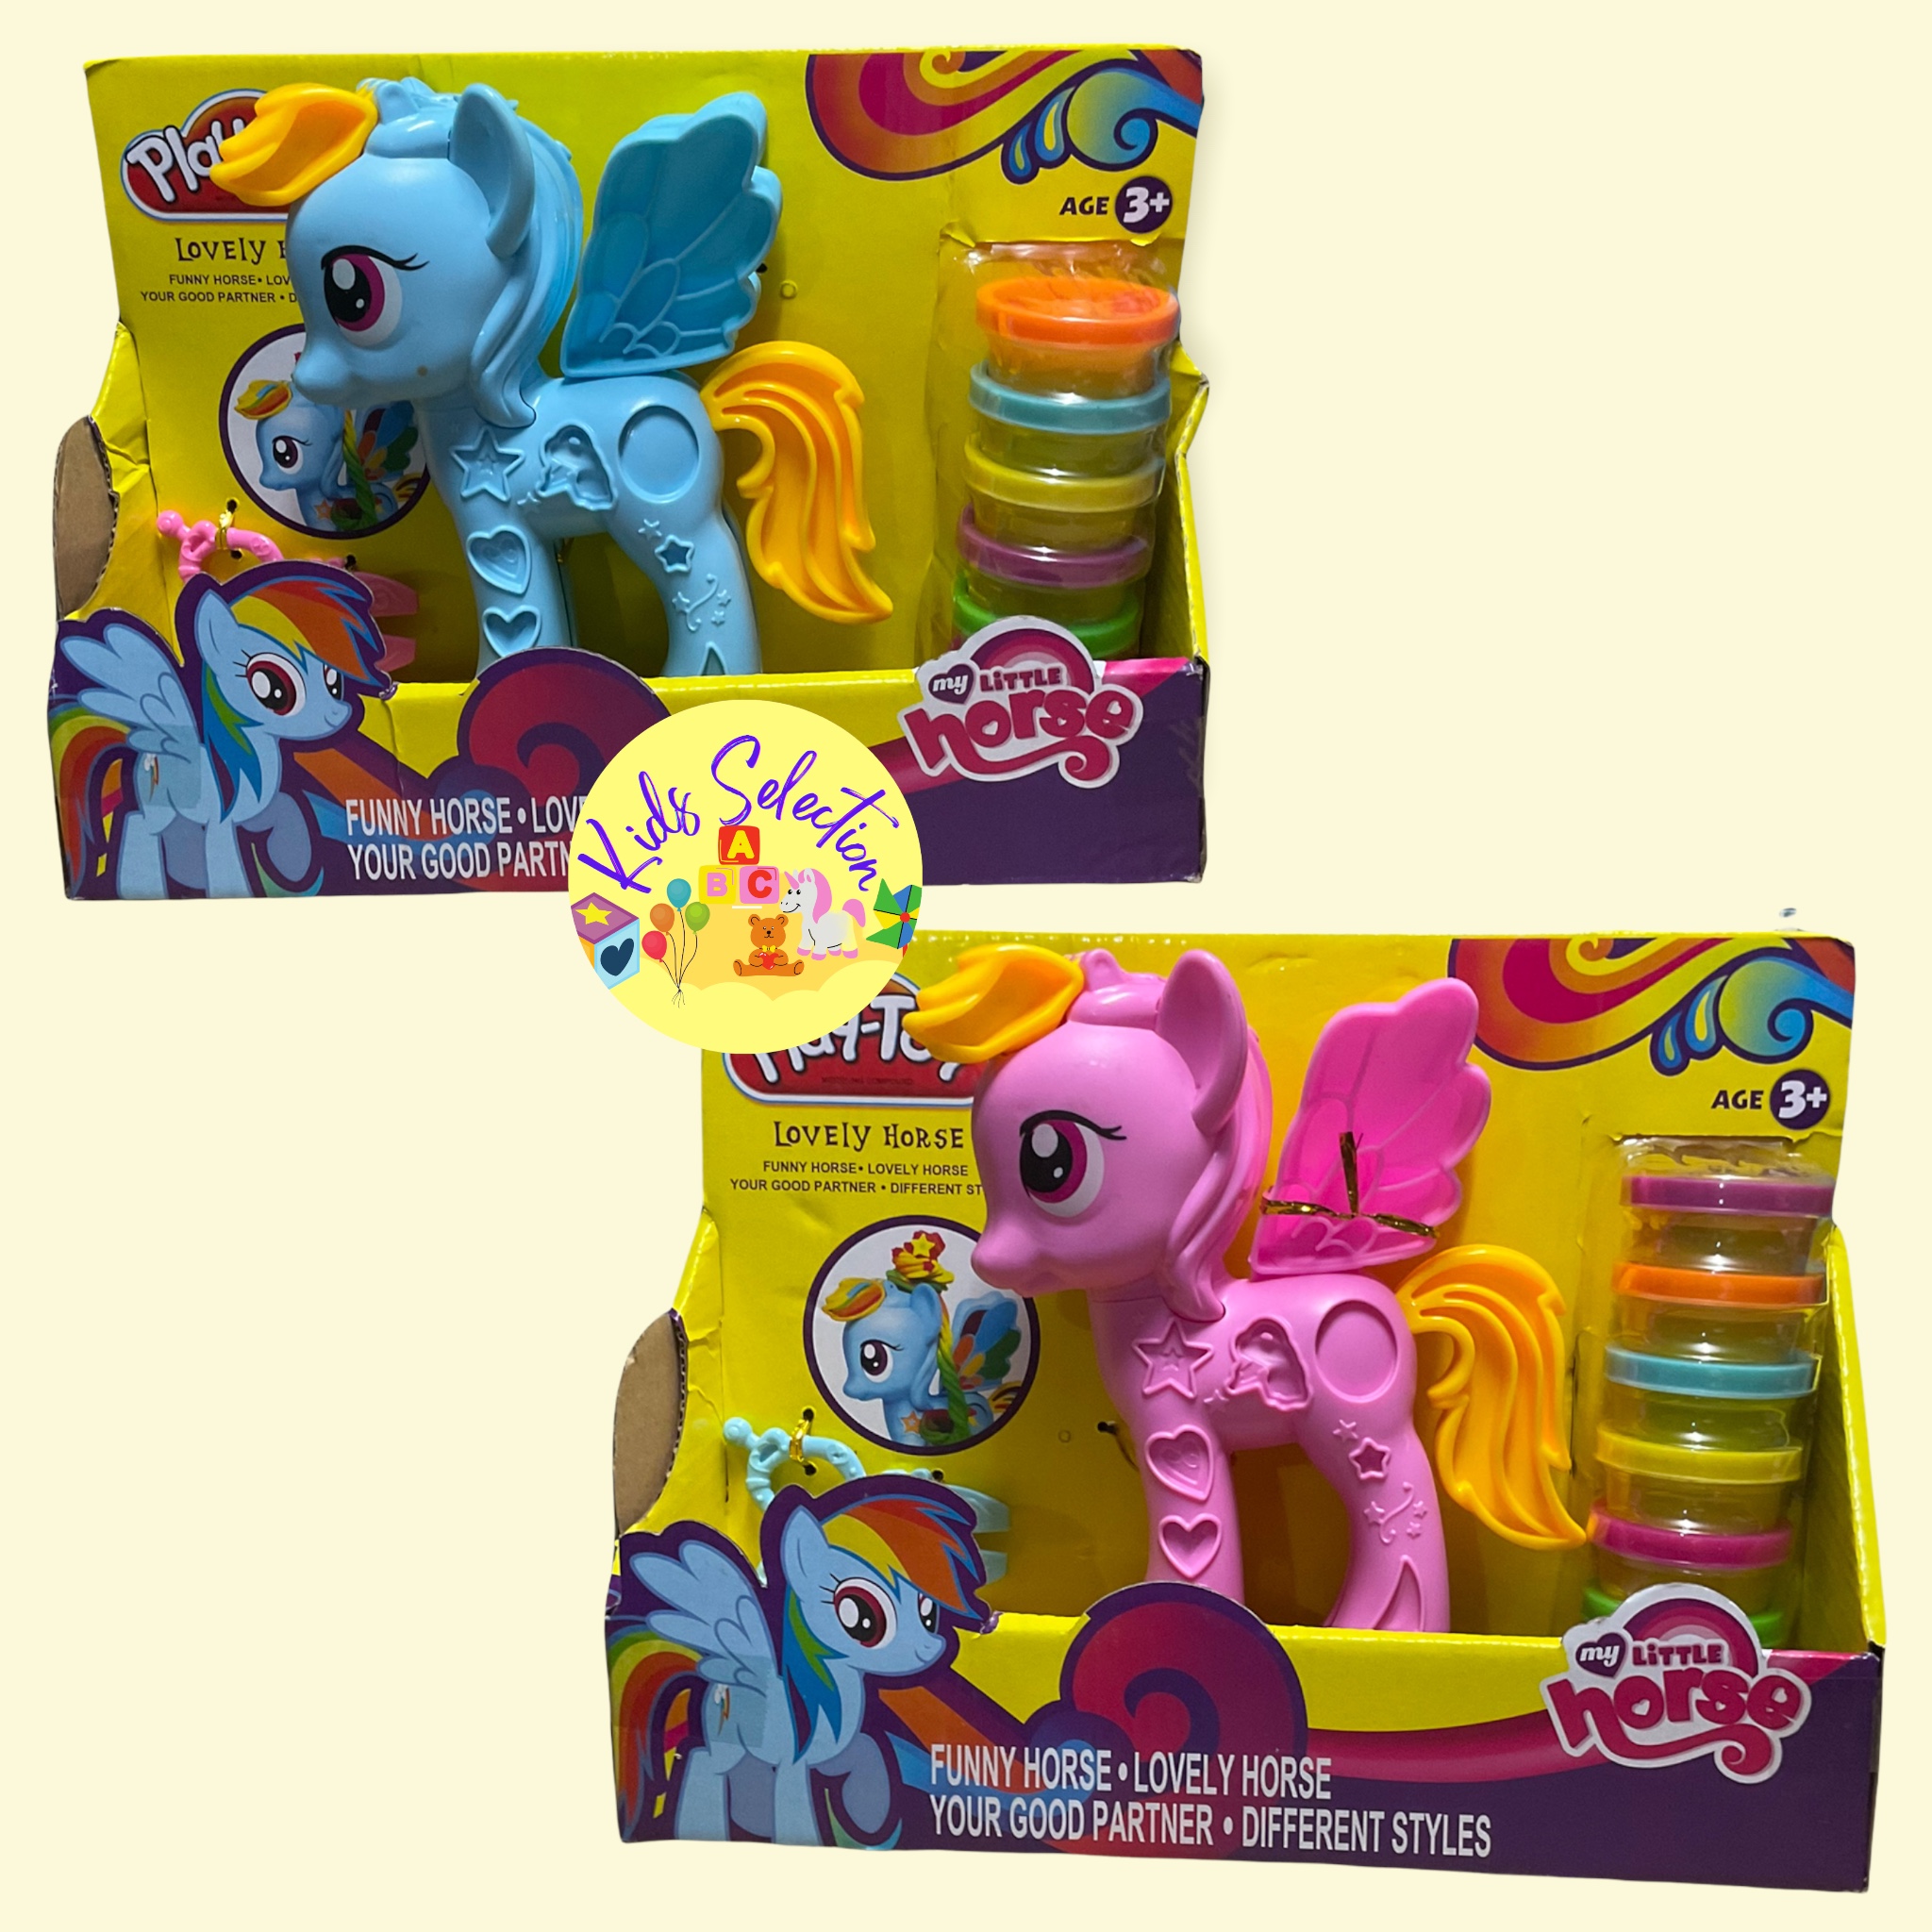 注目 Play-Doh My Little Pony Cutie Mark Creators 並行輸入品